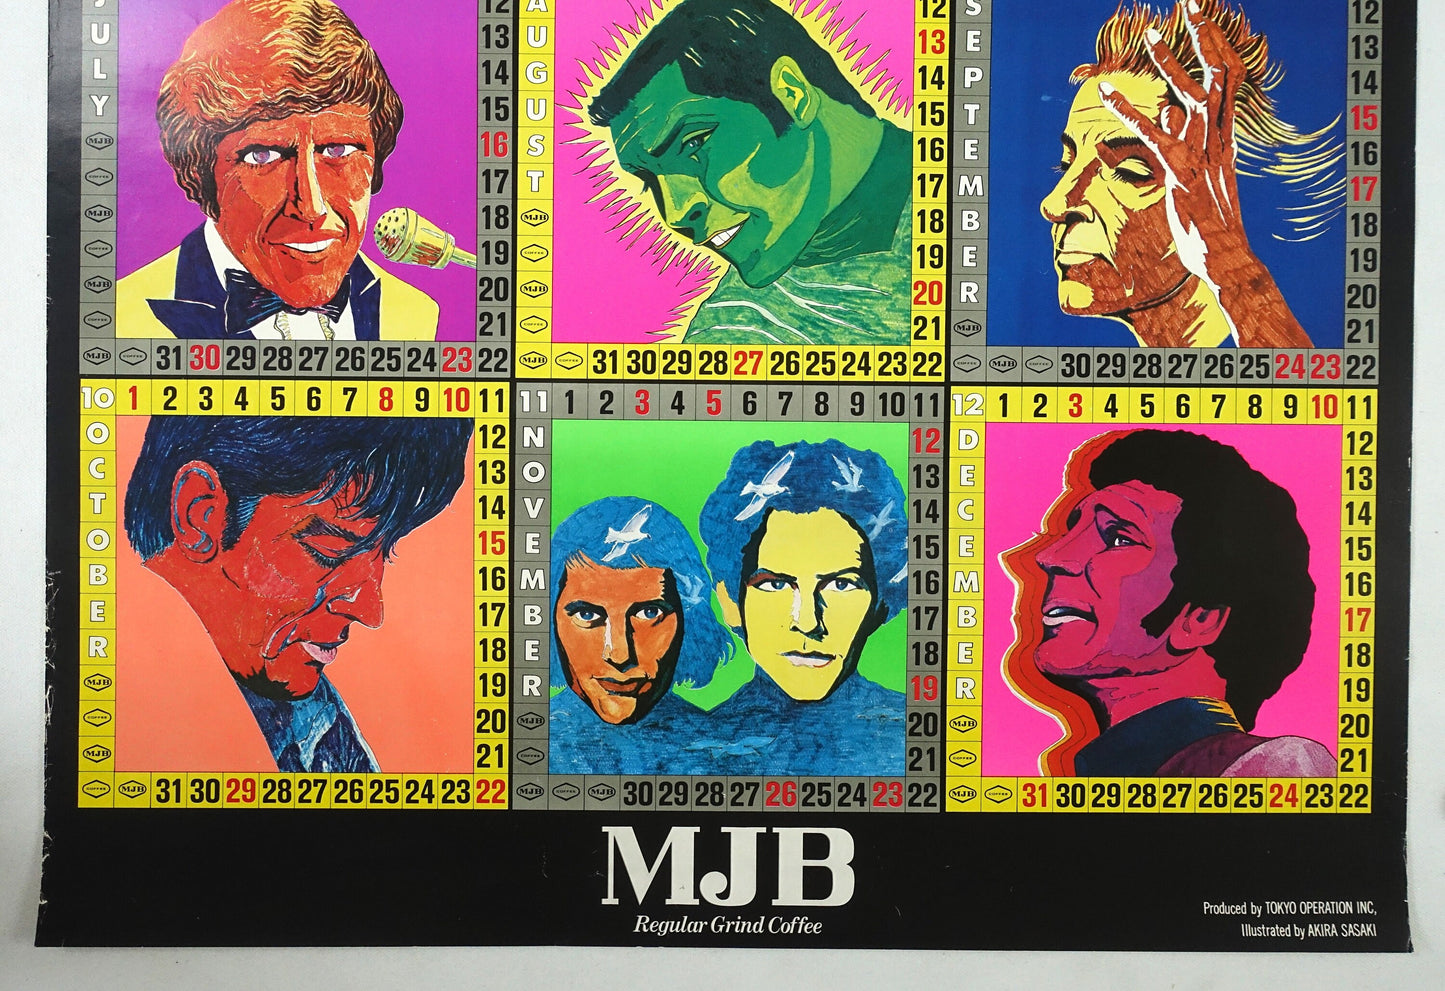 1972 Coffee Celebrities Calendar feat. Elvis Presley, Steve McQueen, Sidney Poitier and more - Original Vintage Poster